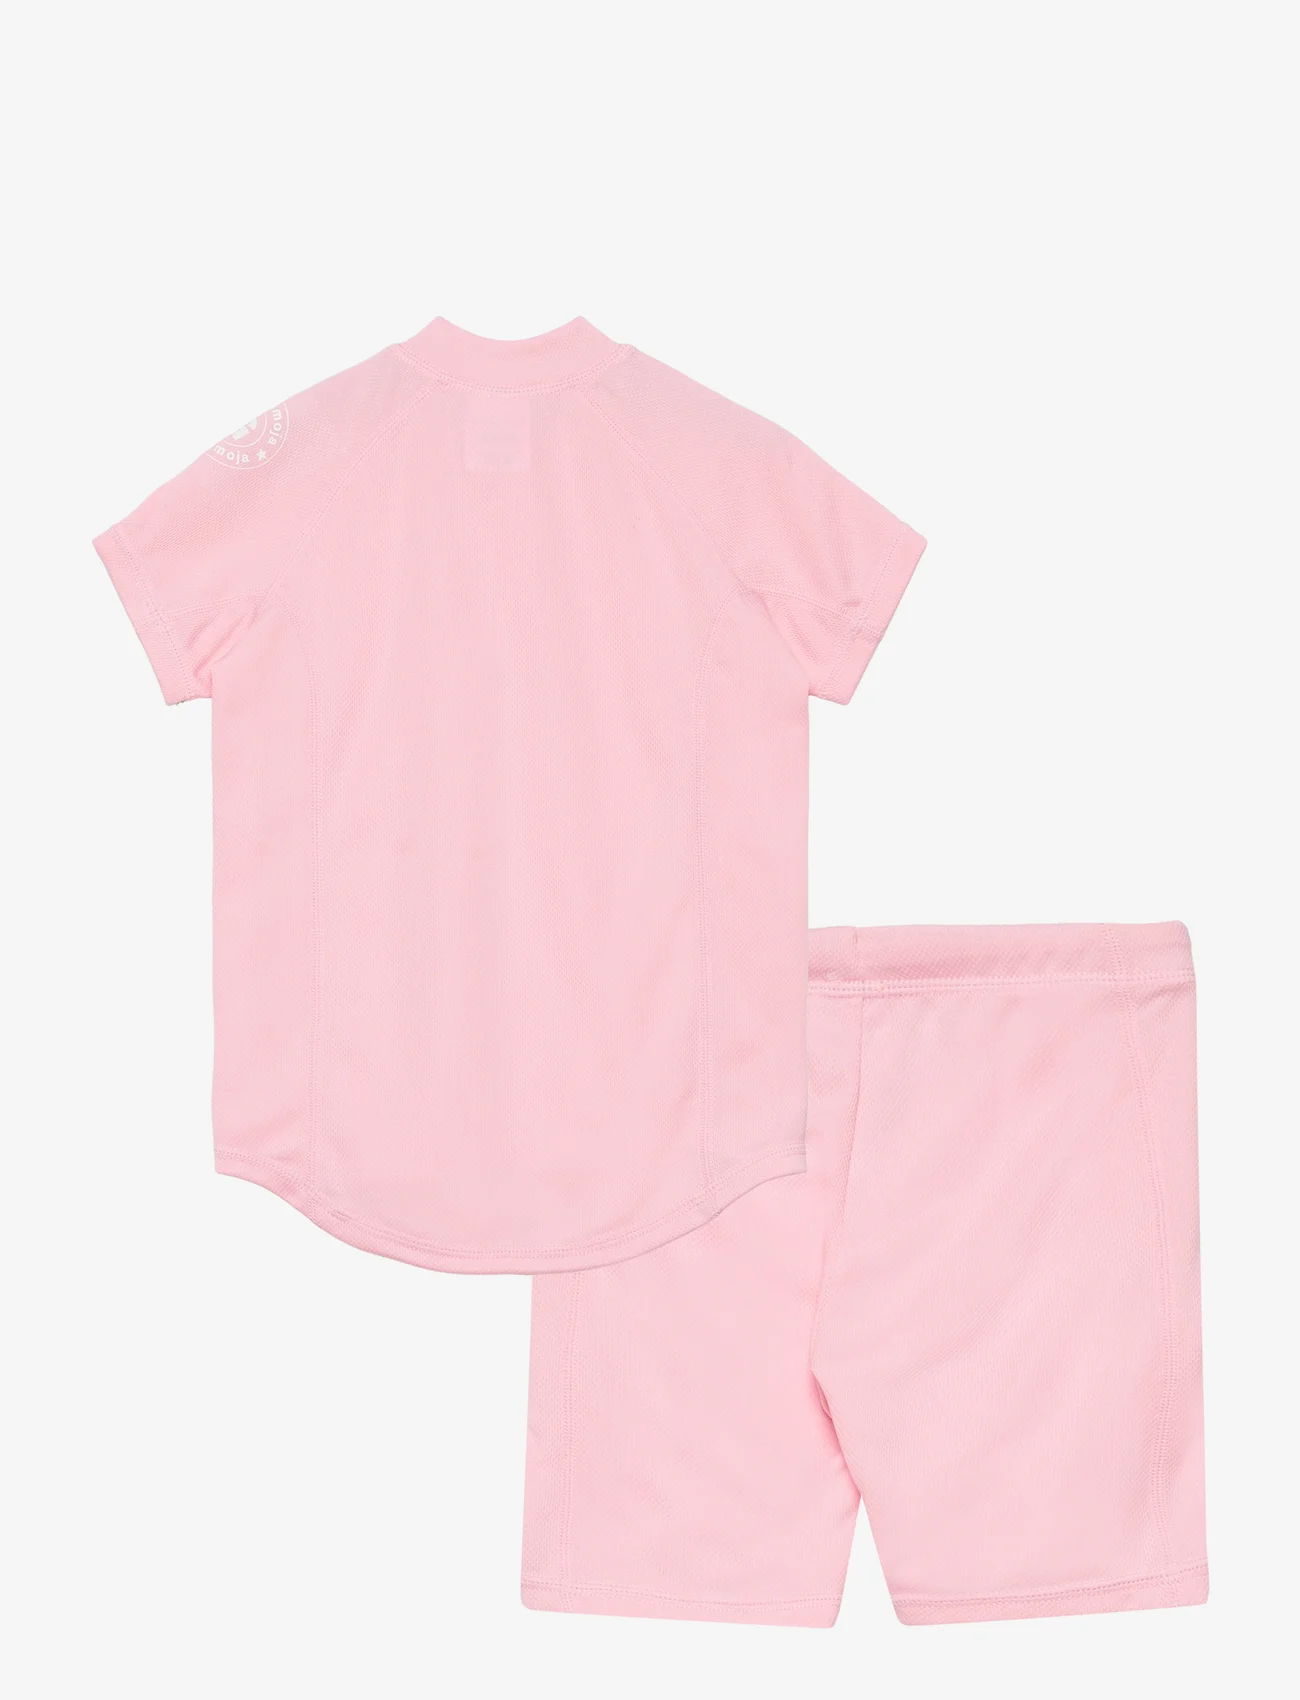 Geggamoja - UV-set - zomerkoopjes - pink - 1